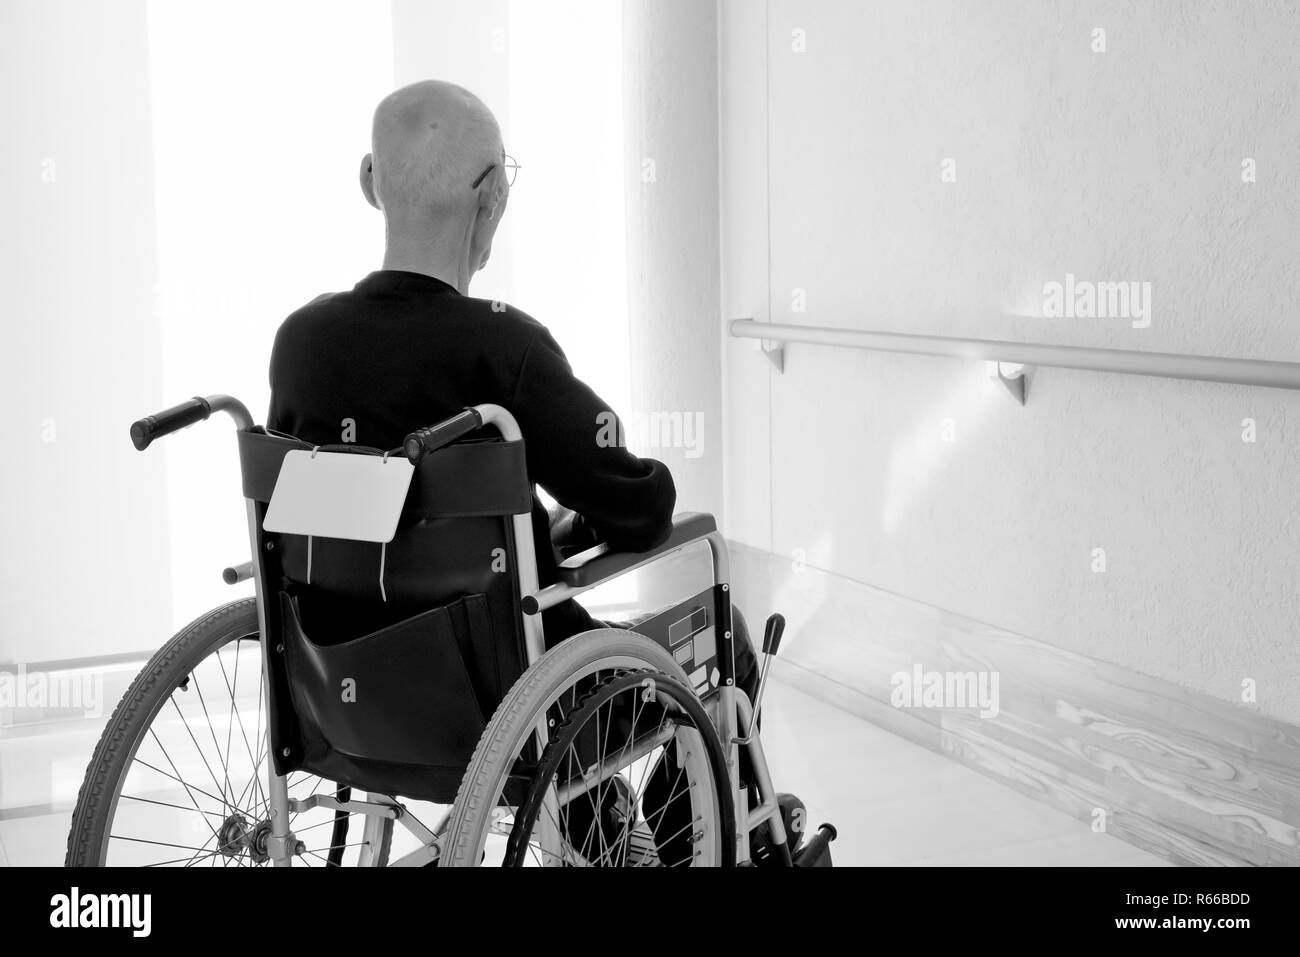 Back view of senior or elderly man on wheelchair at hospital hallway Stock Photo